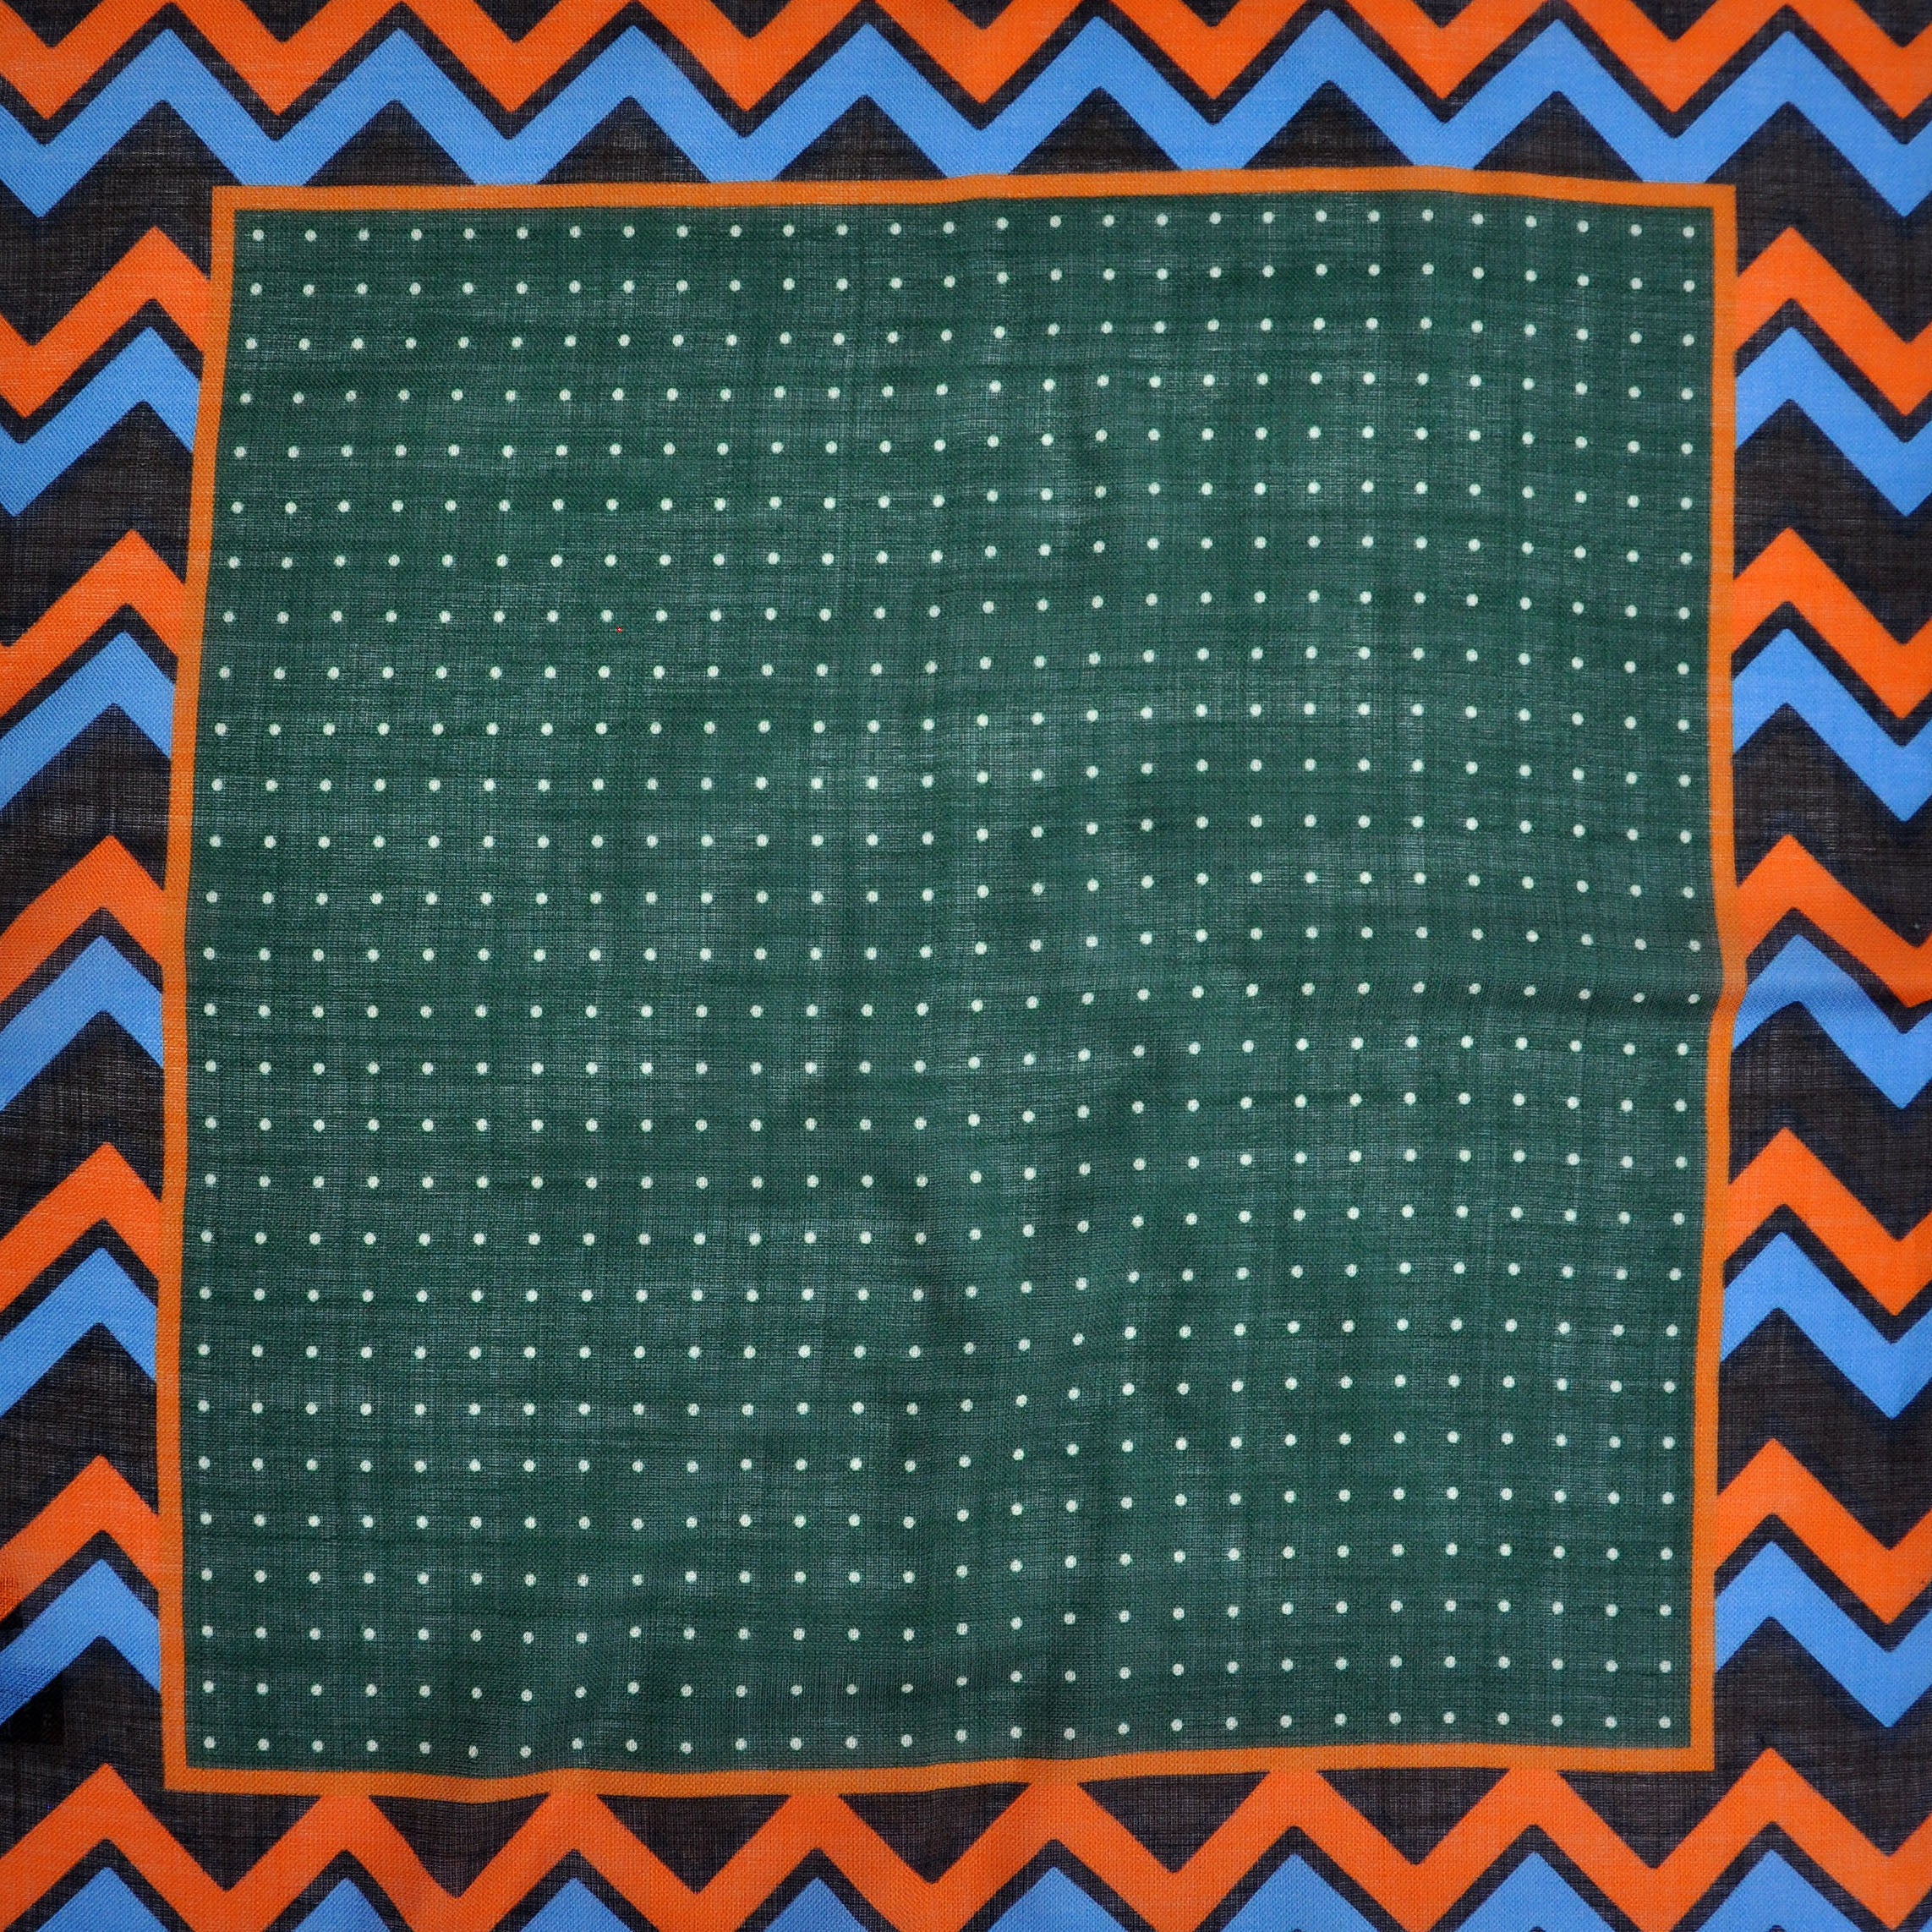 Dots & Chevrons Wool & Silk Pocket Square in Green, Orange & Blue